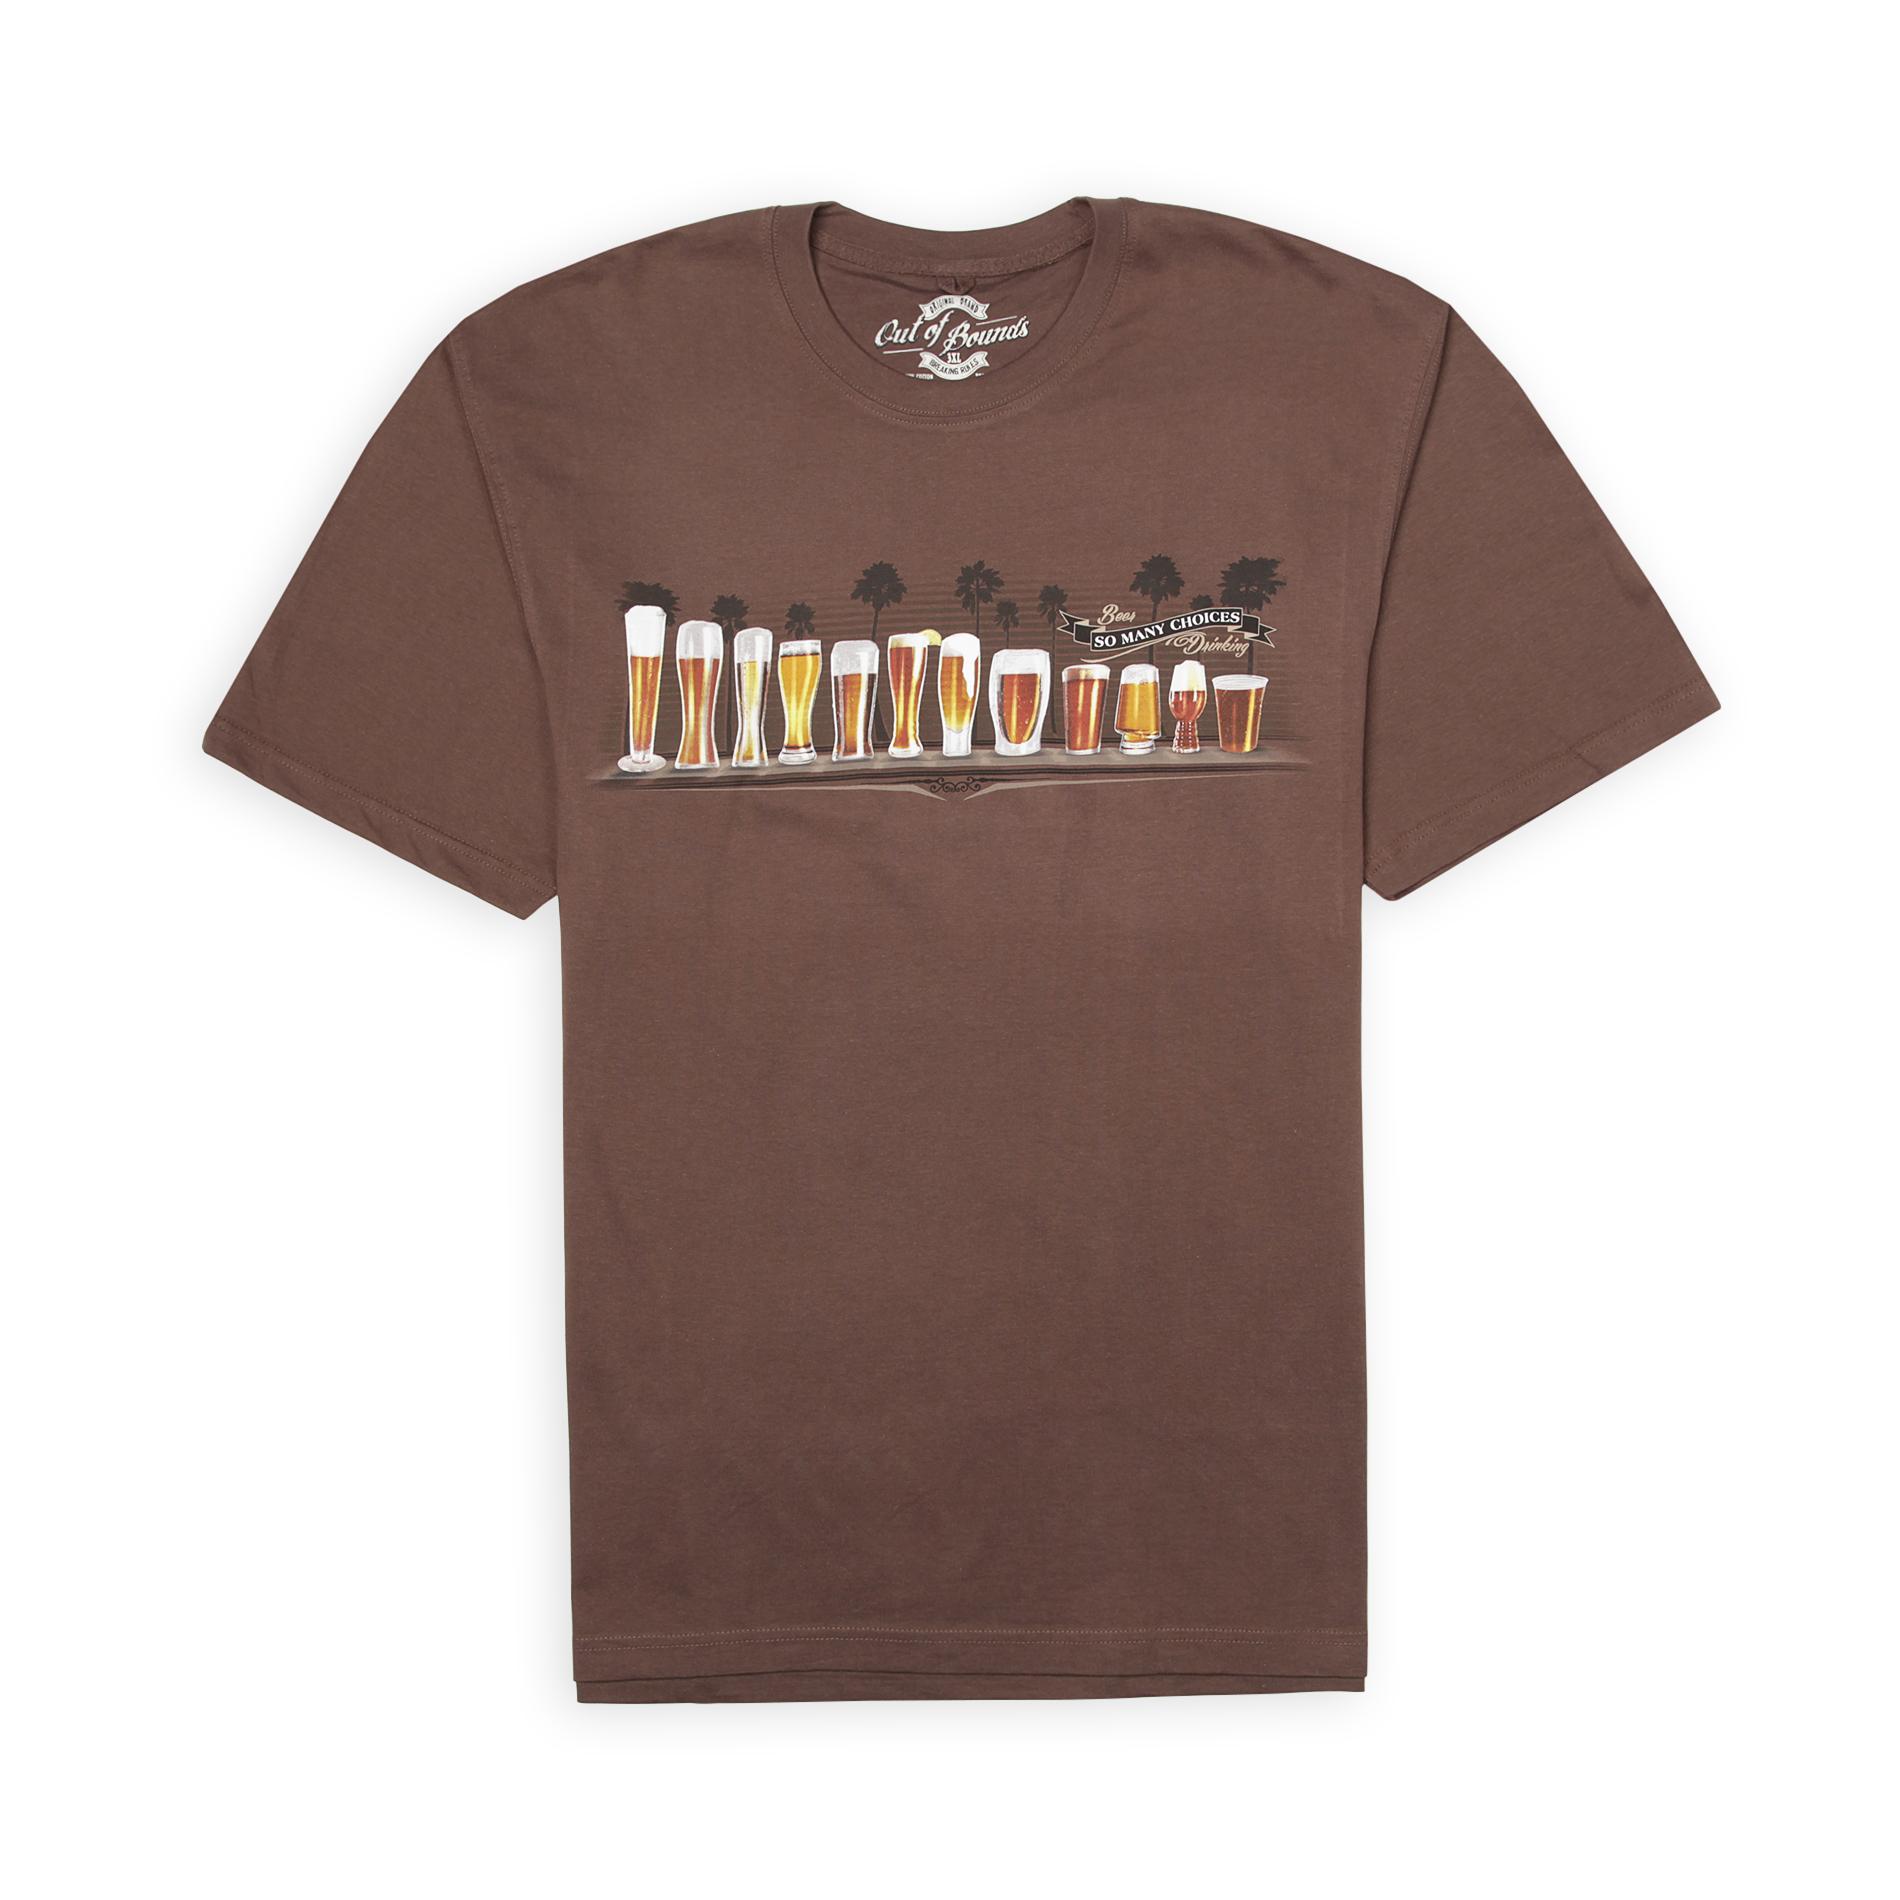 Outdoor Life Men's Big & Tall Graphic T-Shirt - Beer